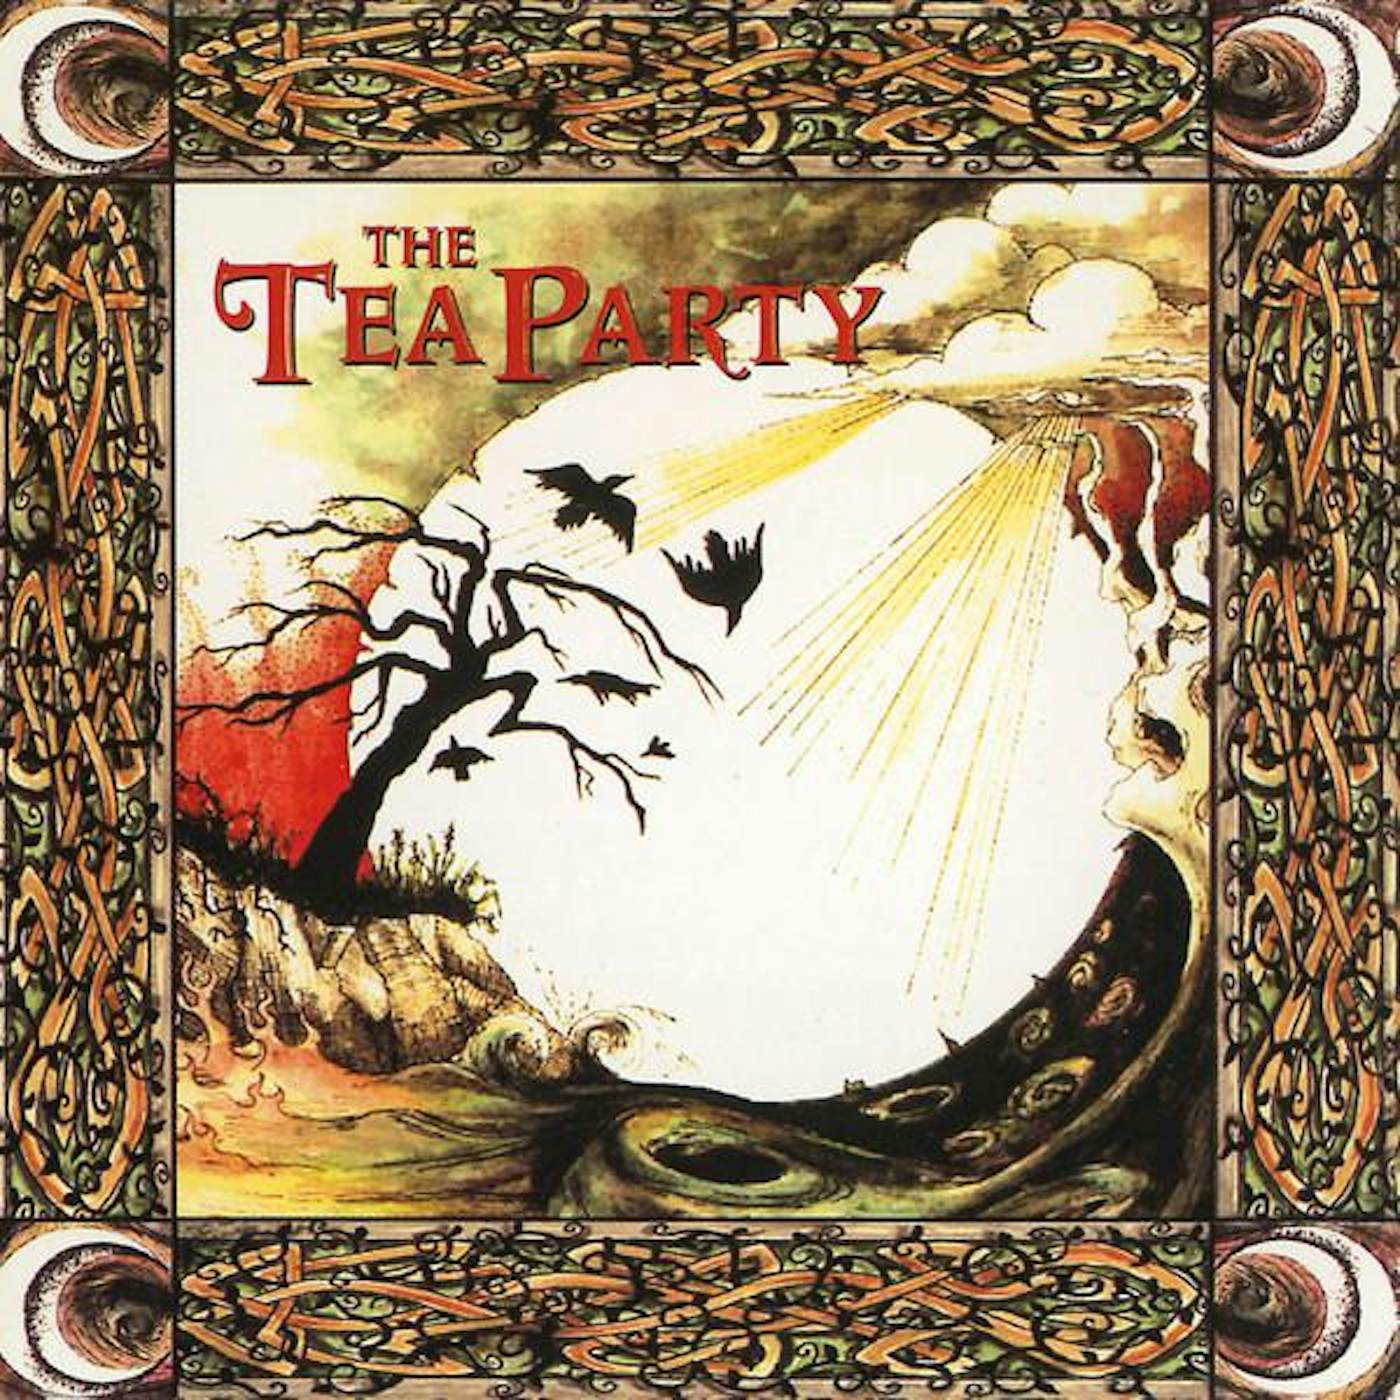 The Tea Party SPLENDOR SOLIS CD